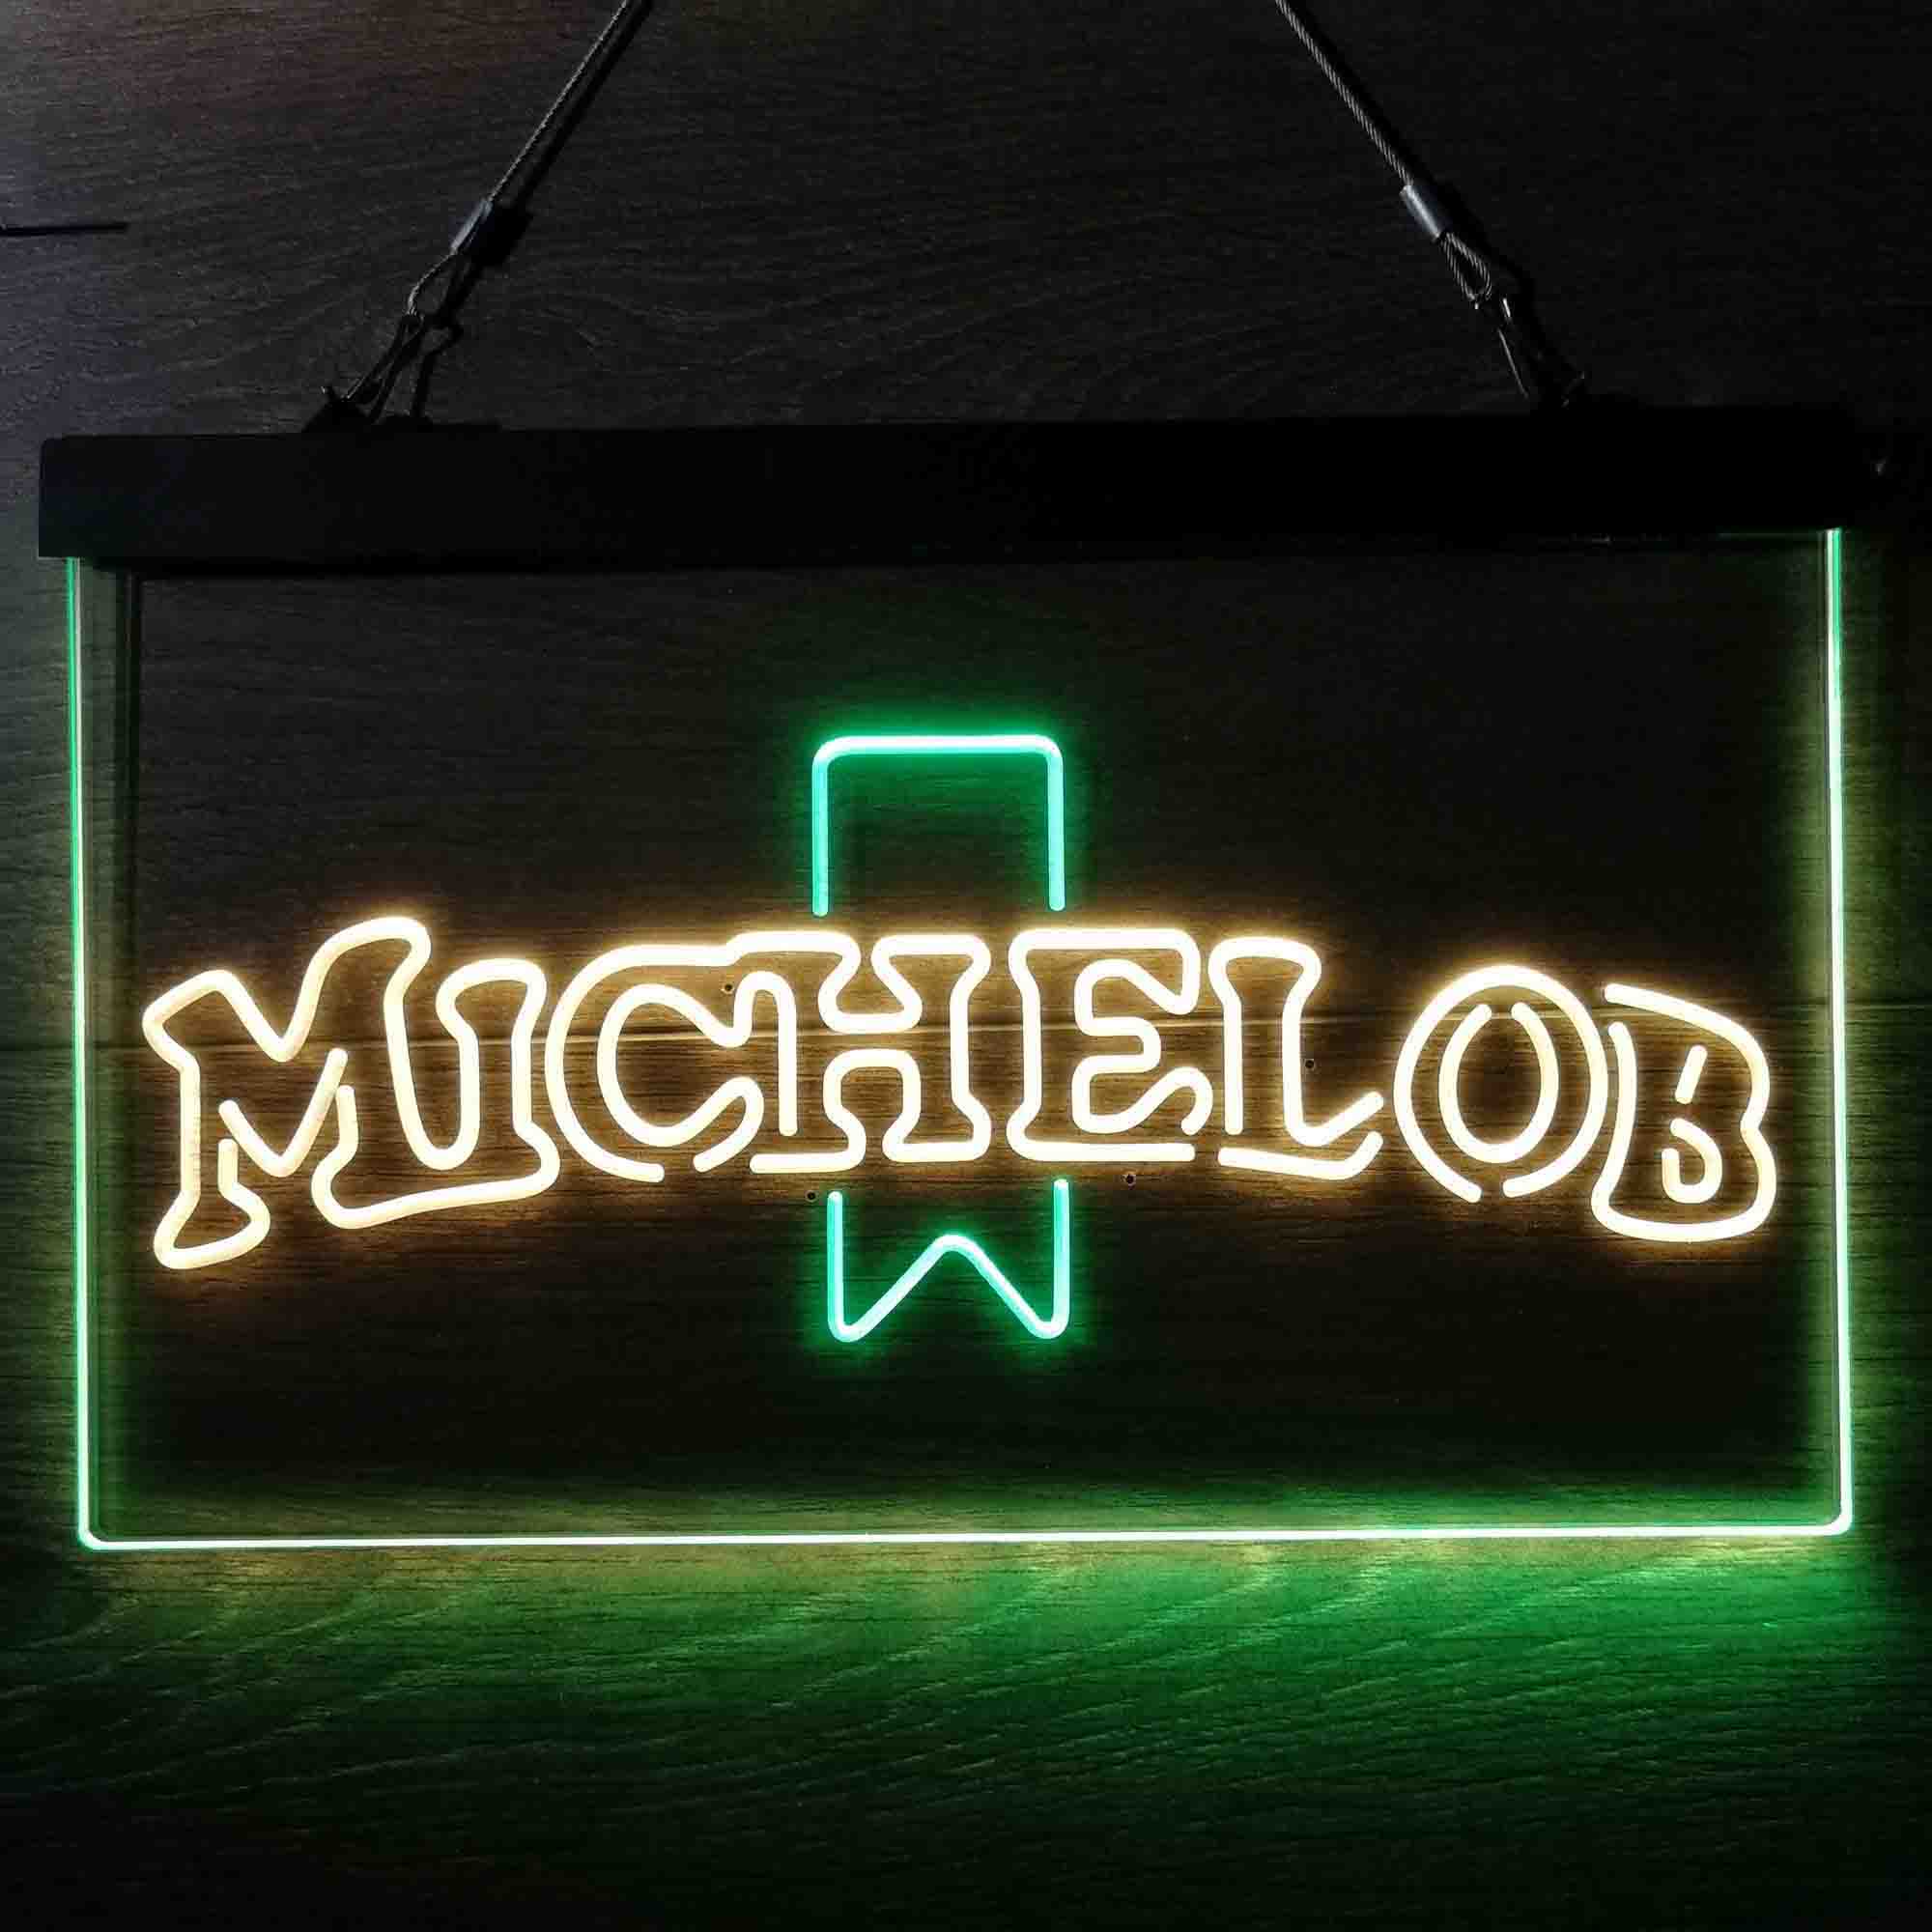 Michelob Logo Neon-Like LED Sign